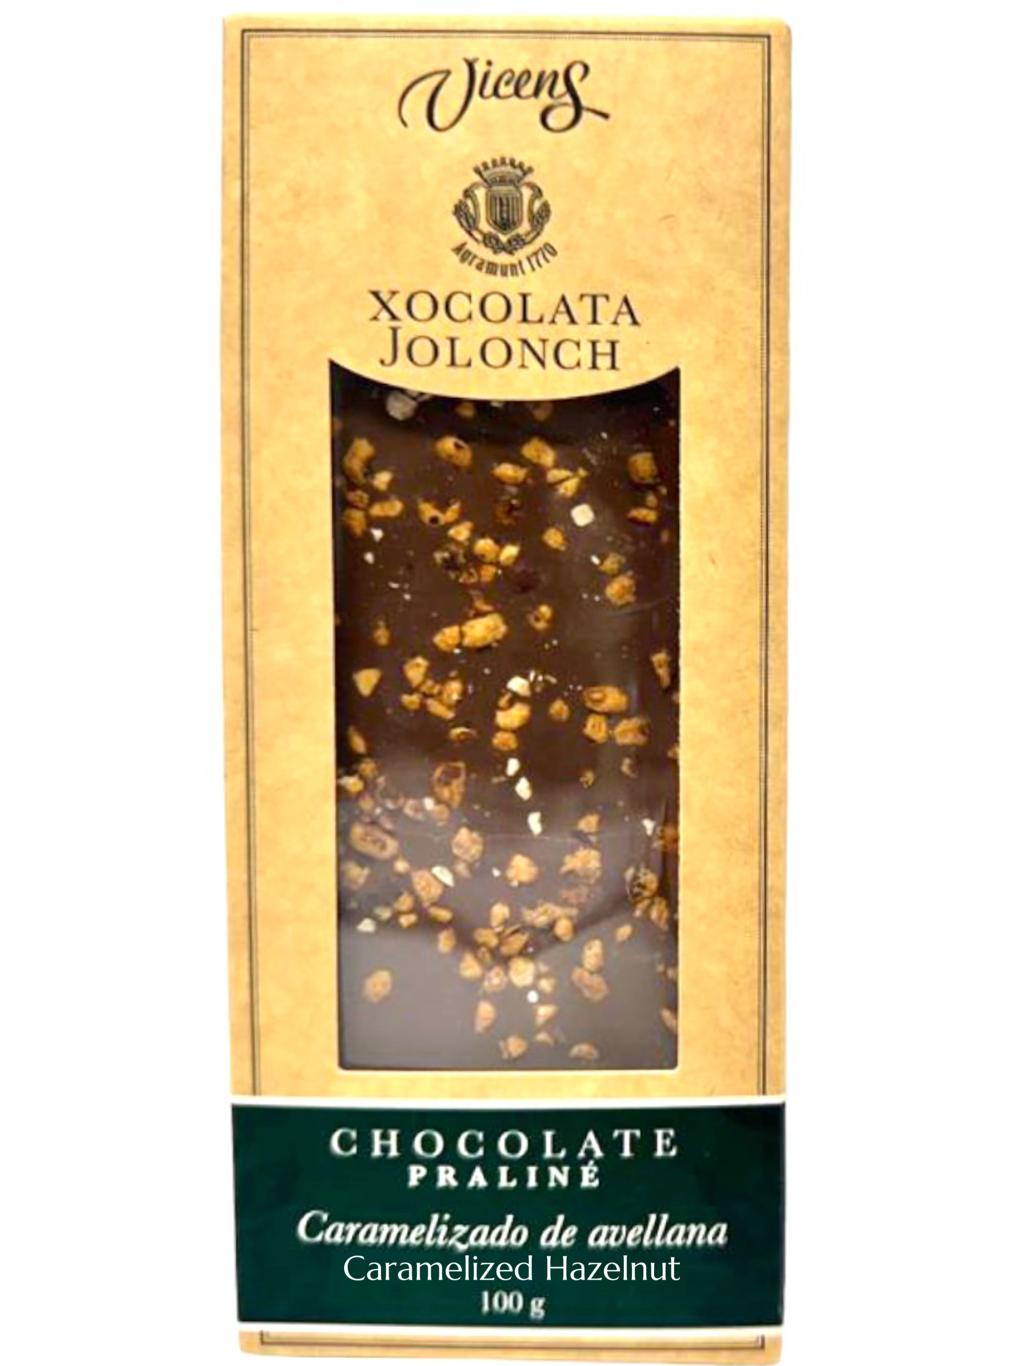 Vicens Xocolata Jolonch Chocolate Praline Caramelizado De Avellana Spanish Chocolate Praline With Caramelised Hazelnut 100g Best Before December 2024